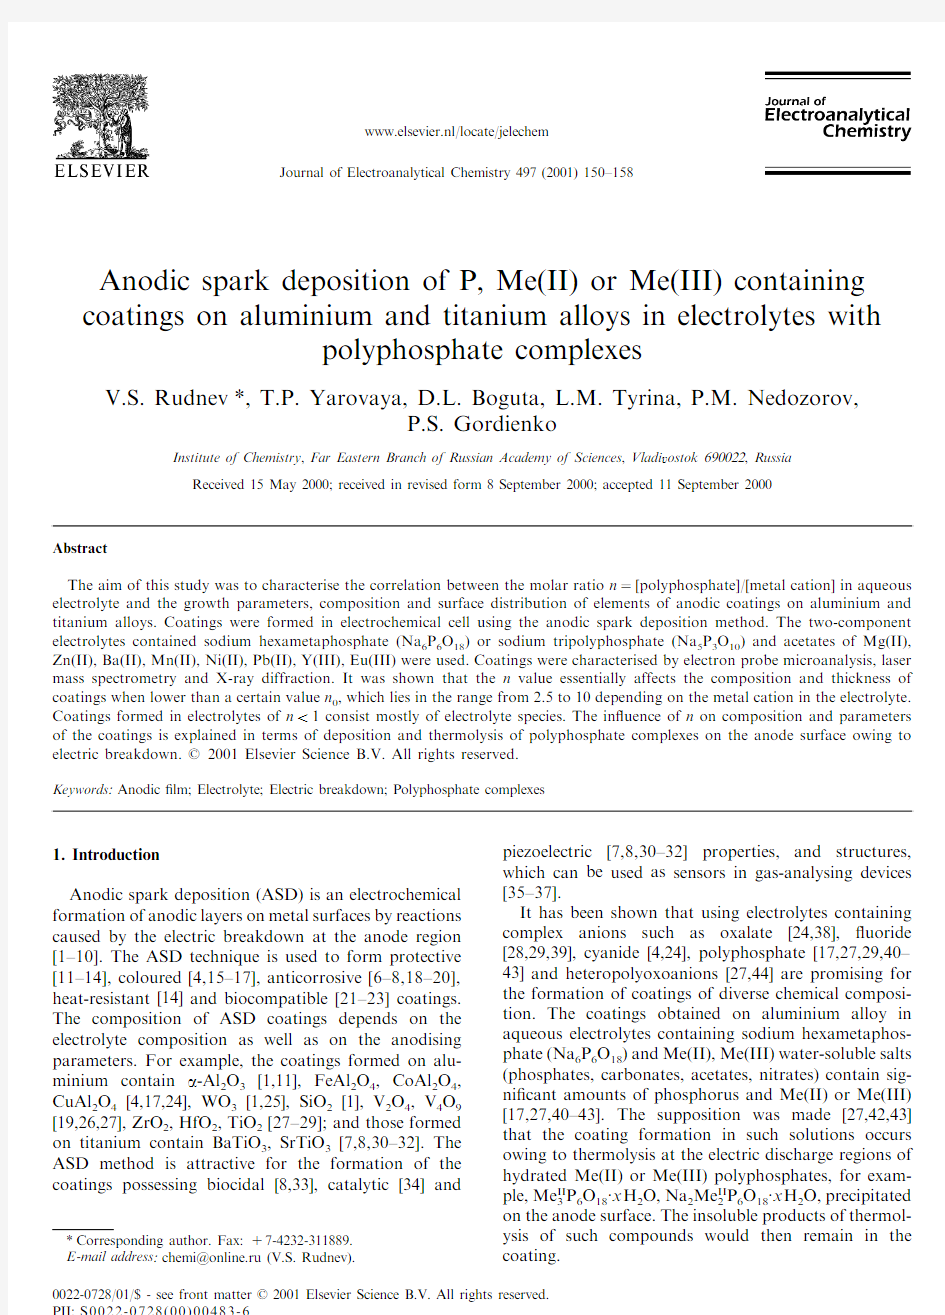 Anodic spark deposition of P, Me(II) or Me(III) containing coatings on aluminium and titanium alloys